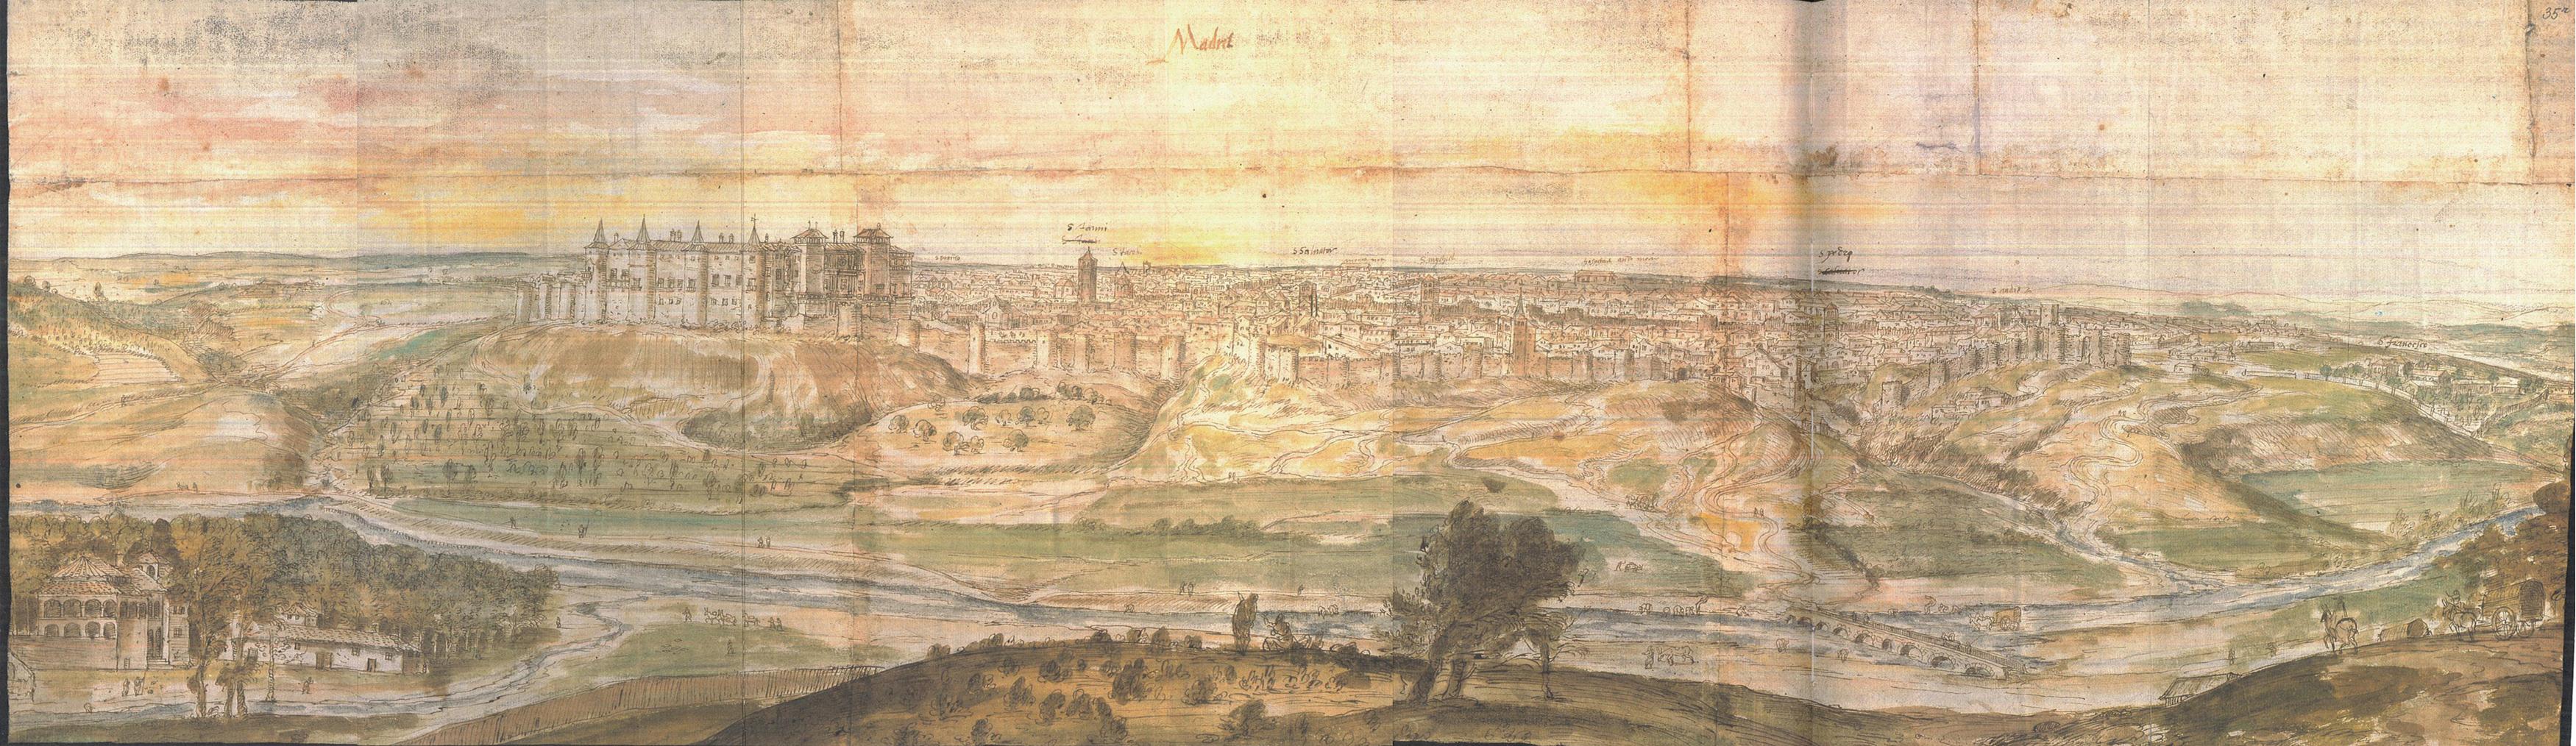 Anton Van der Wyngaerde: Vista de Madrid. 1562. 